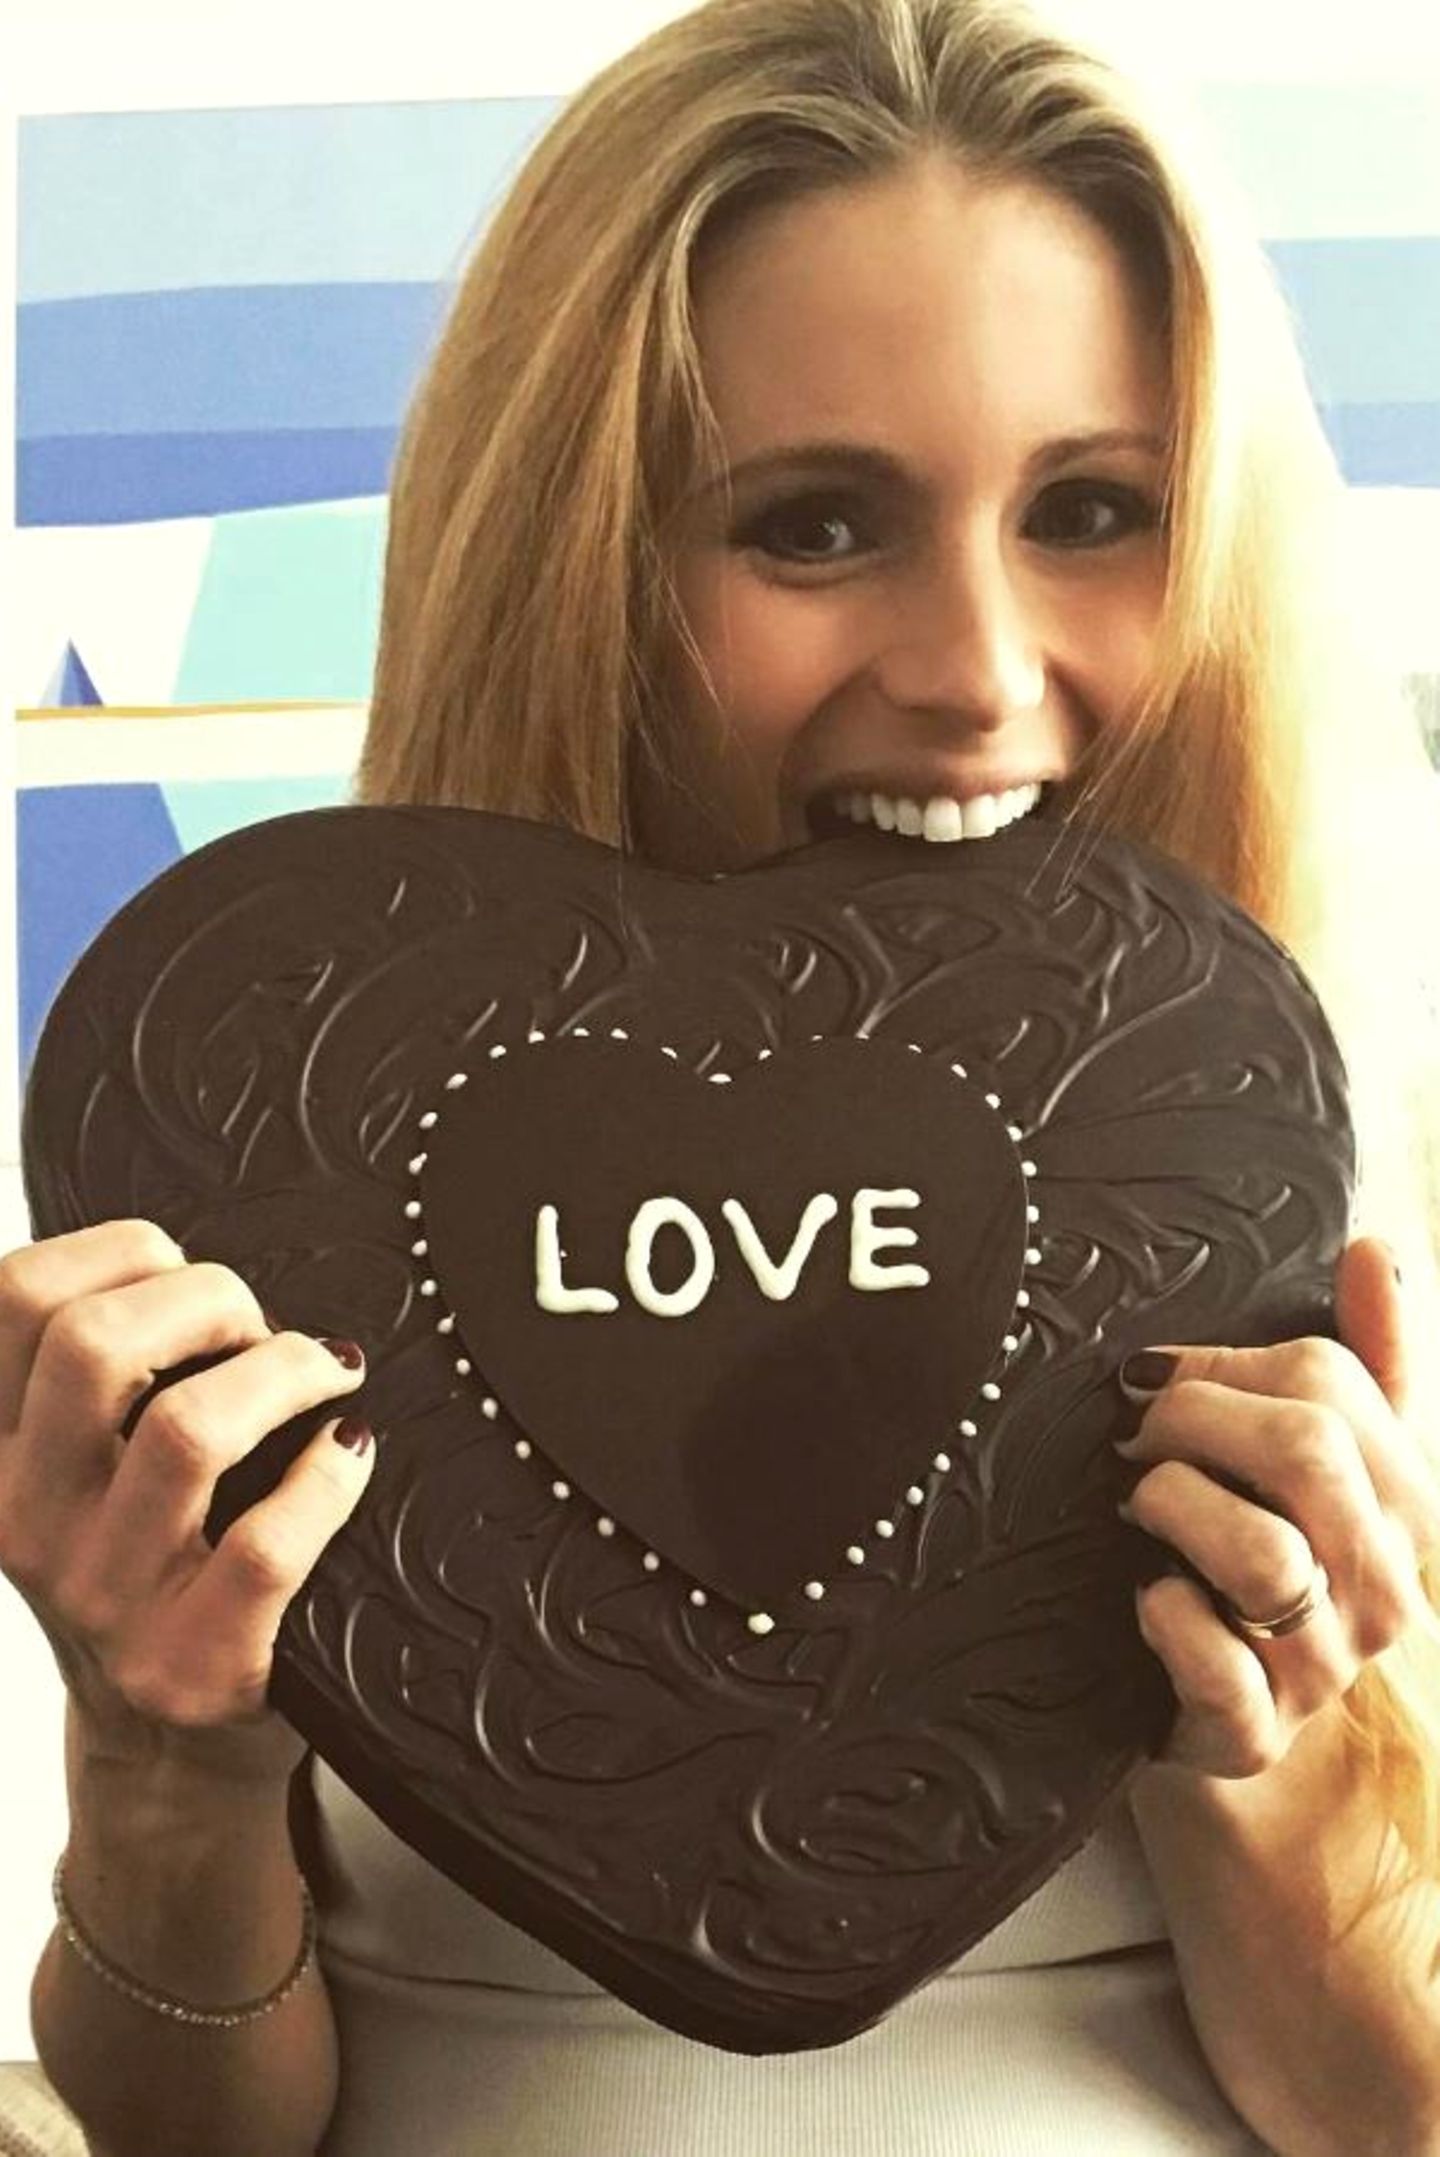 Michelle Hunziker sendet schokoladige Liebesgrüße an ihre Fans.